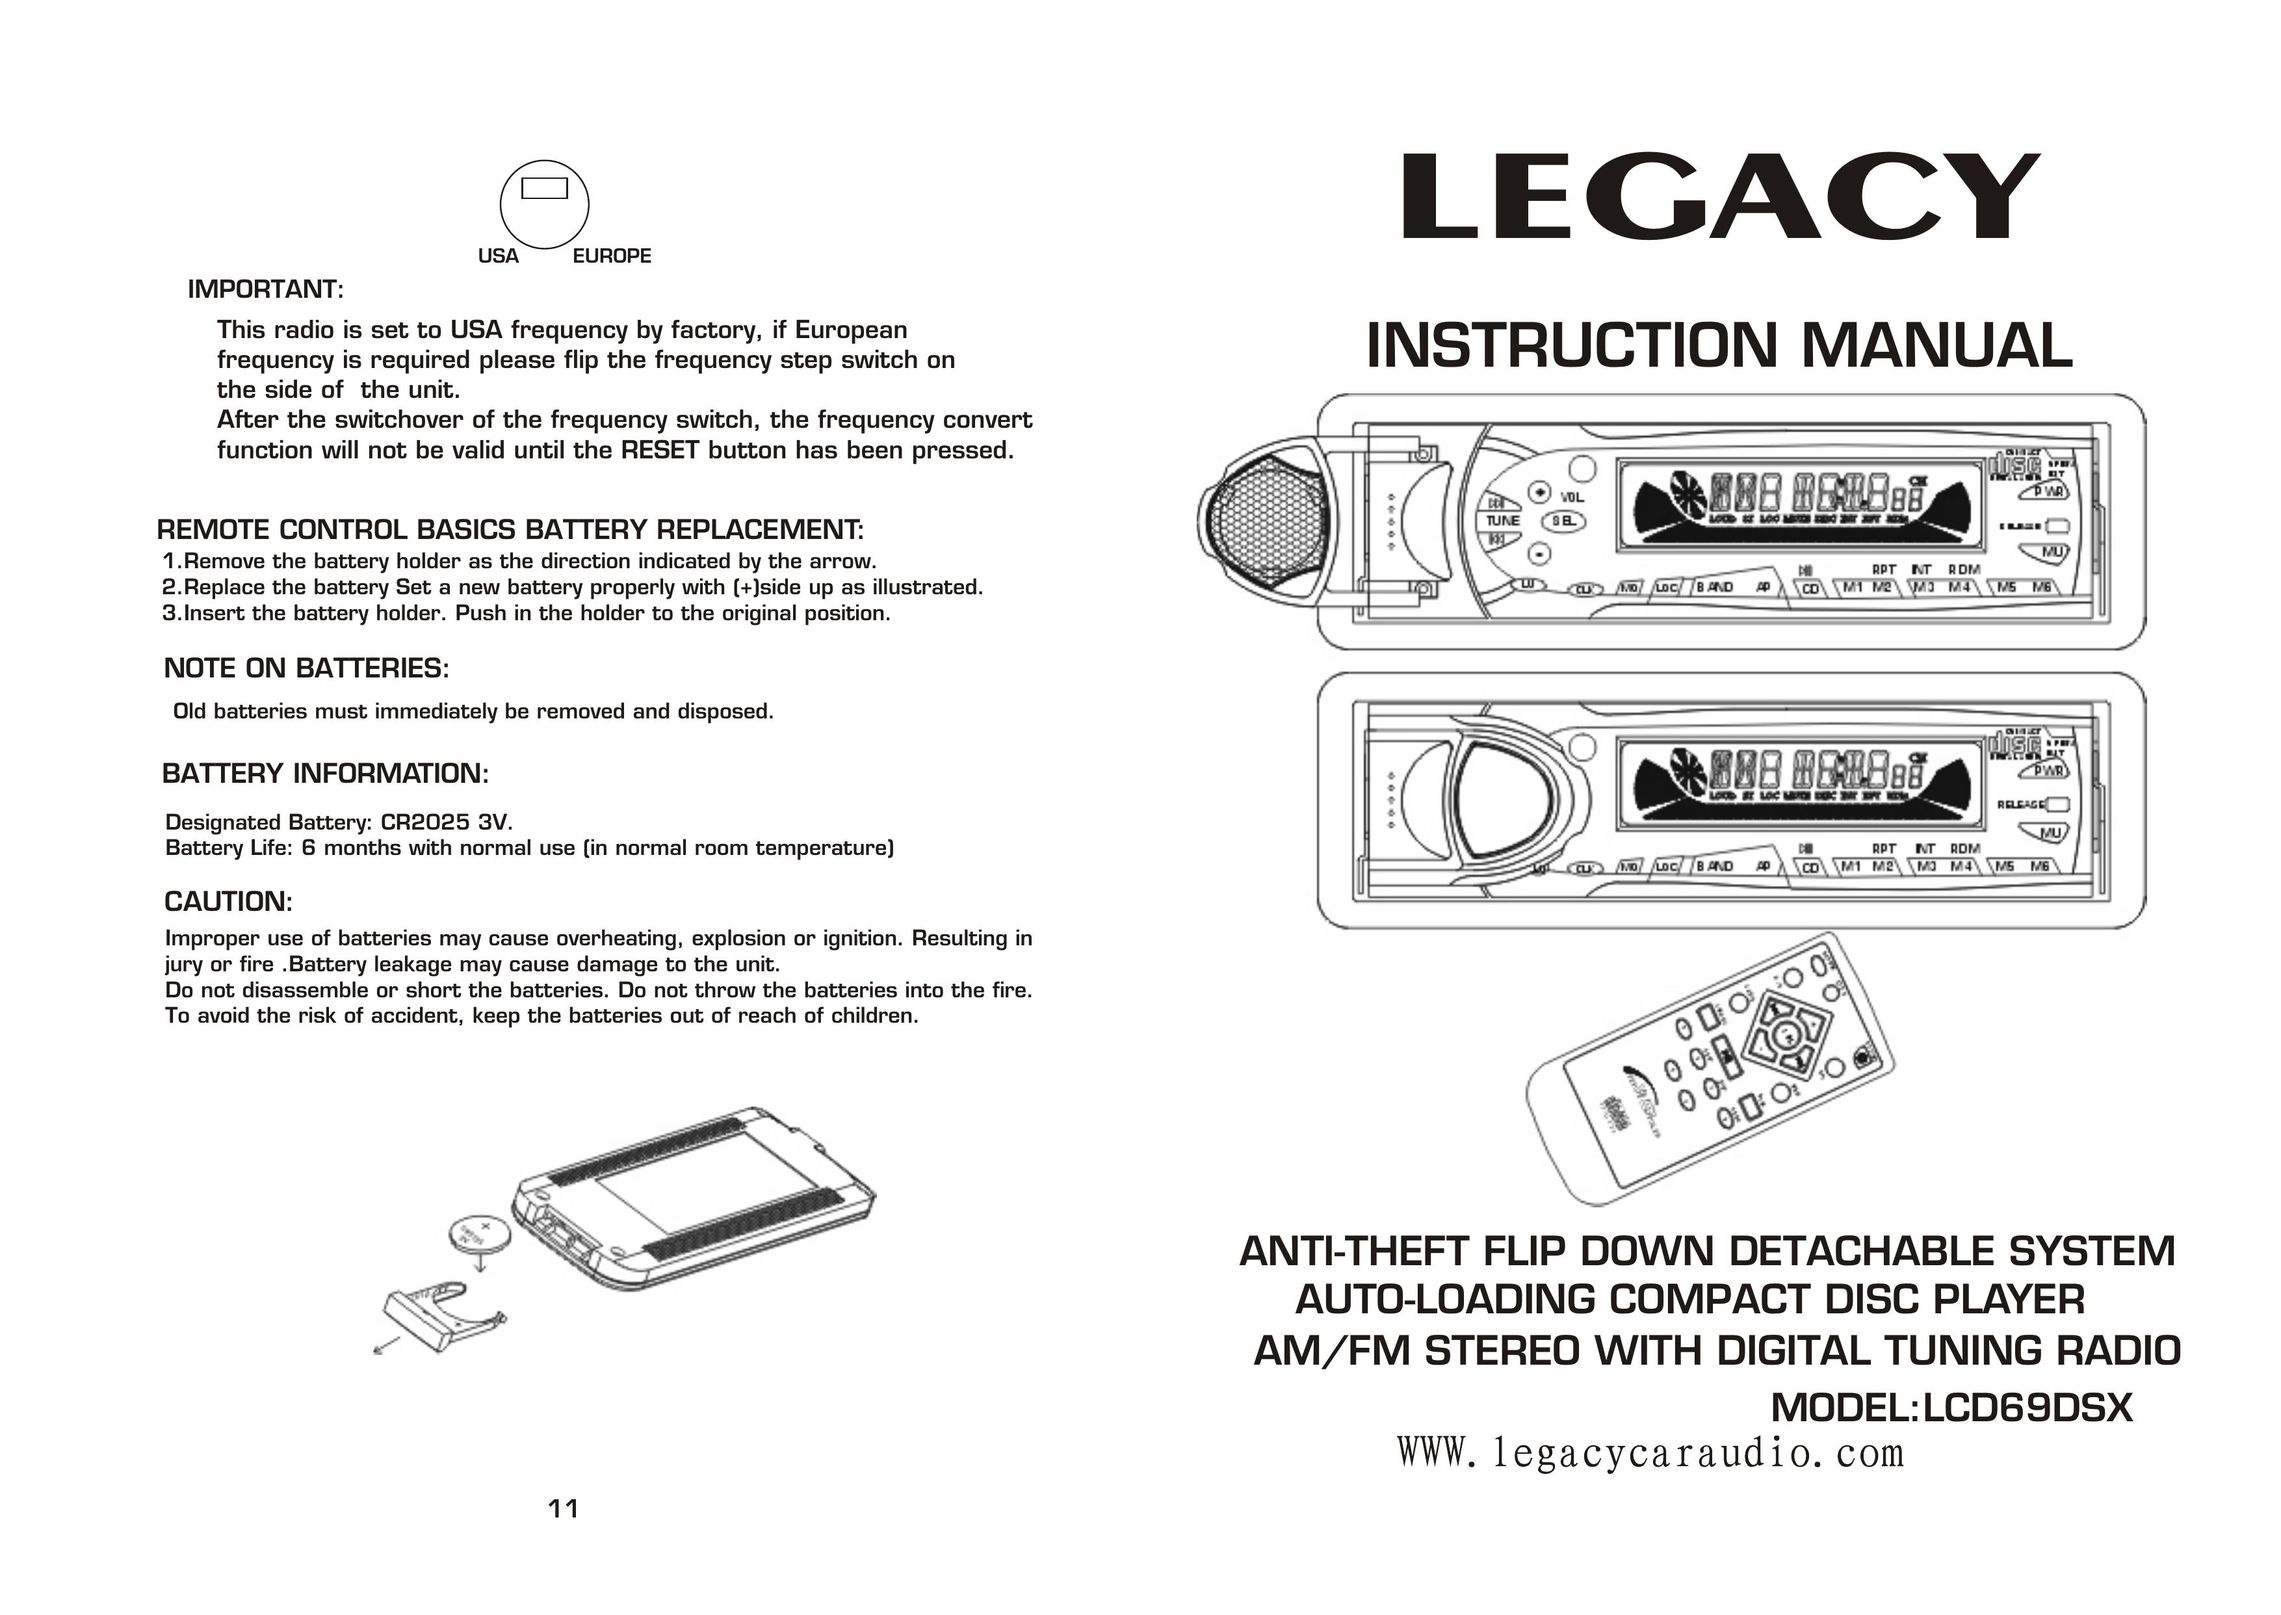 Legacy Car Audio LCD69DSX CD Player User Manual